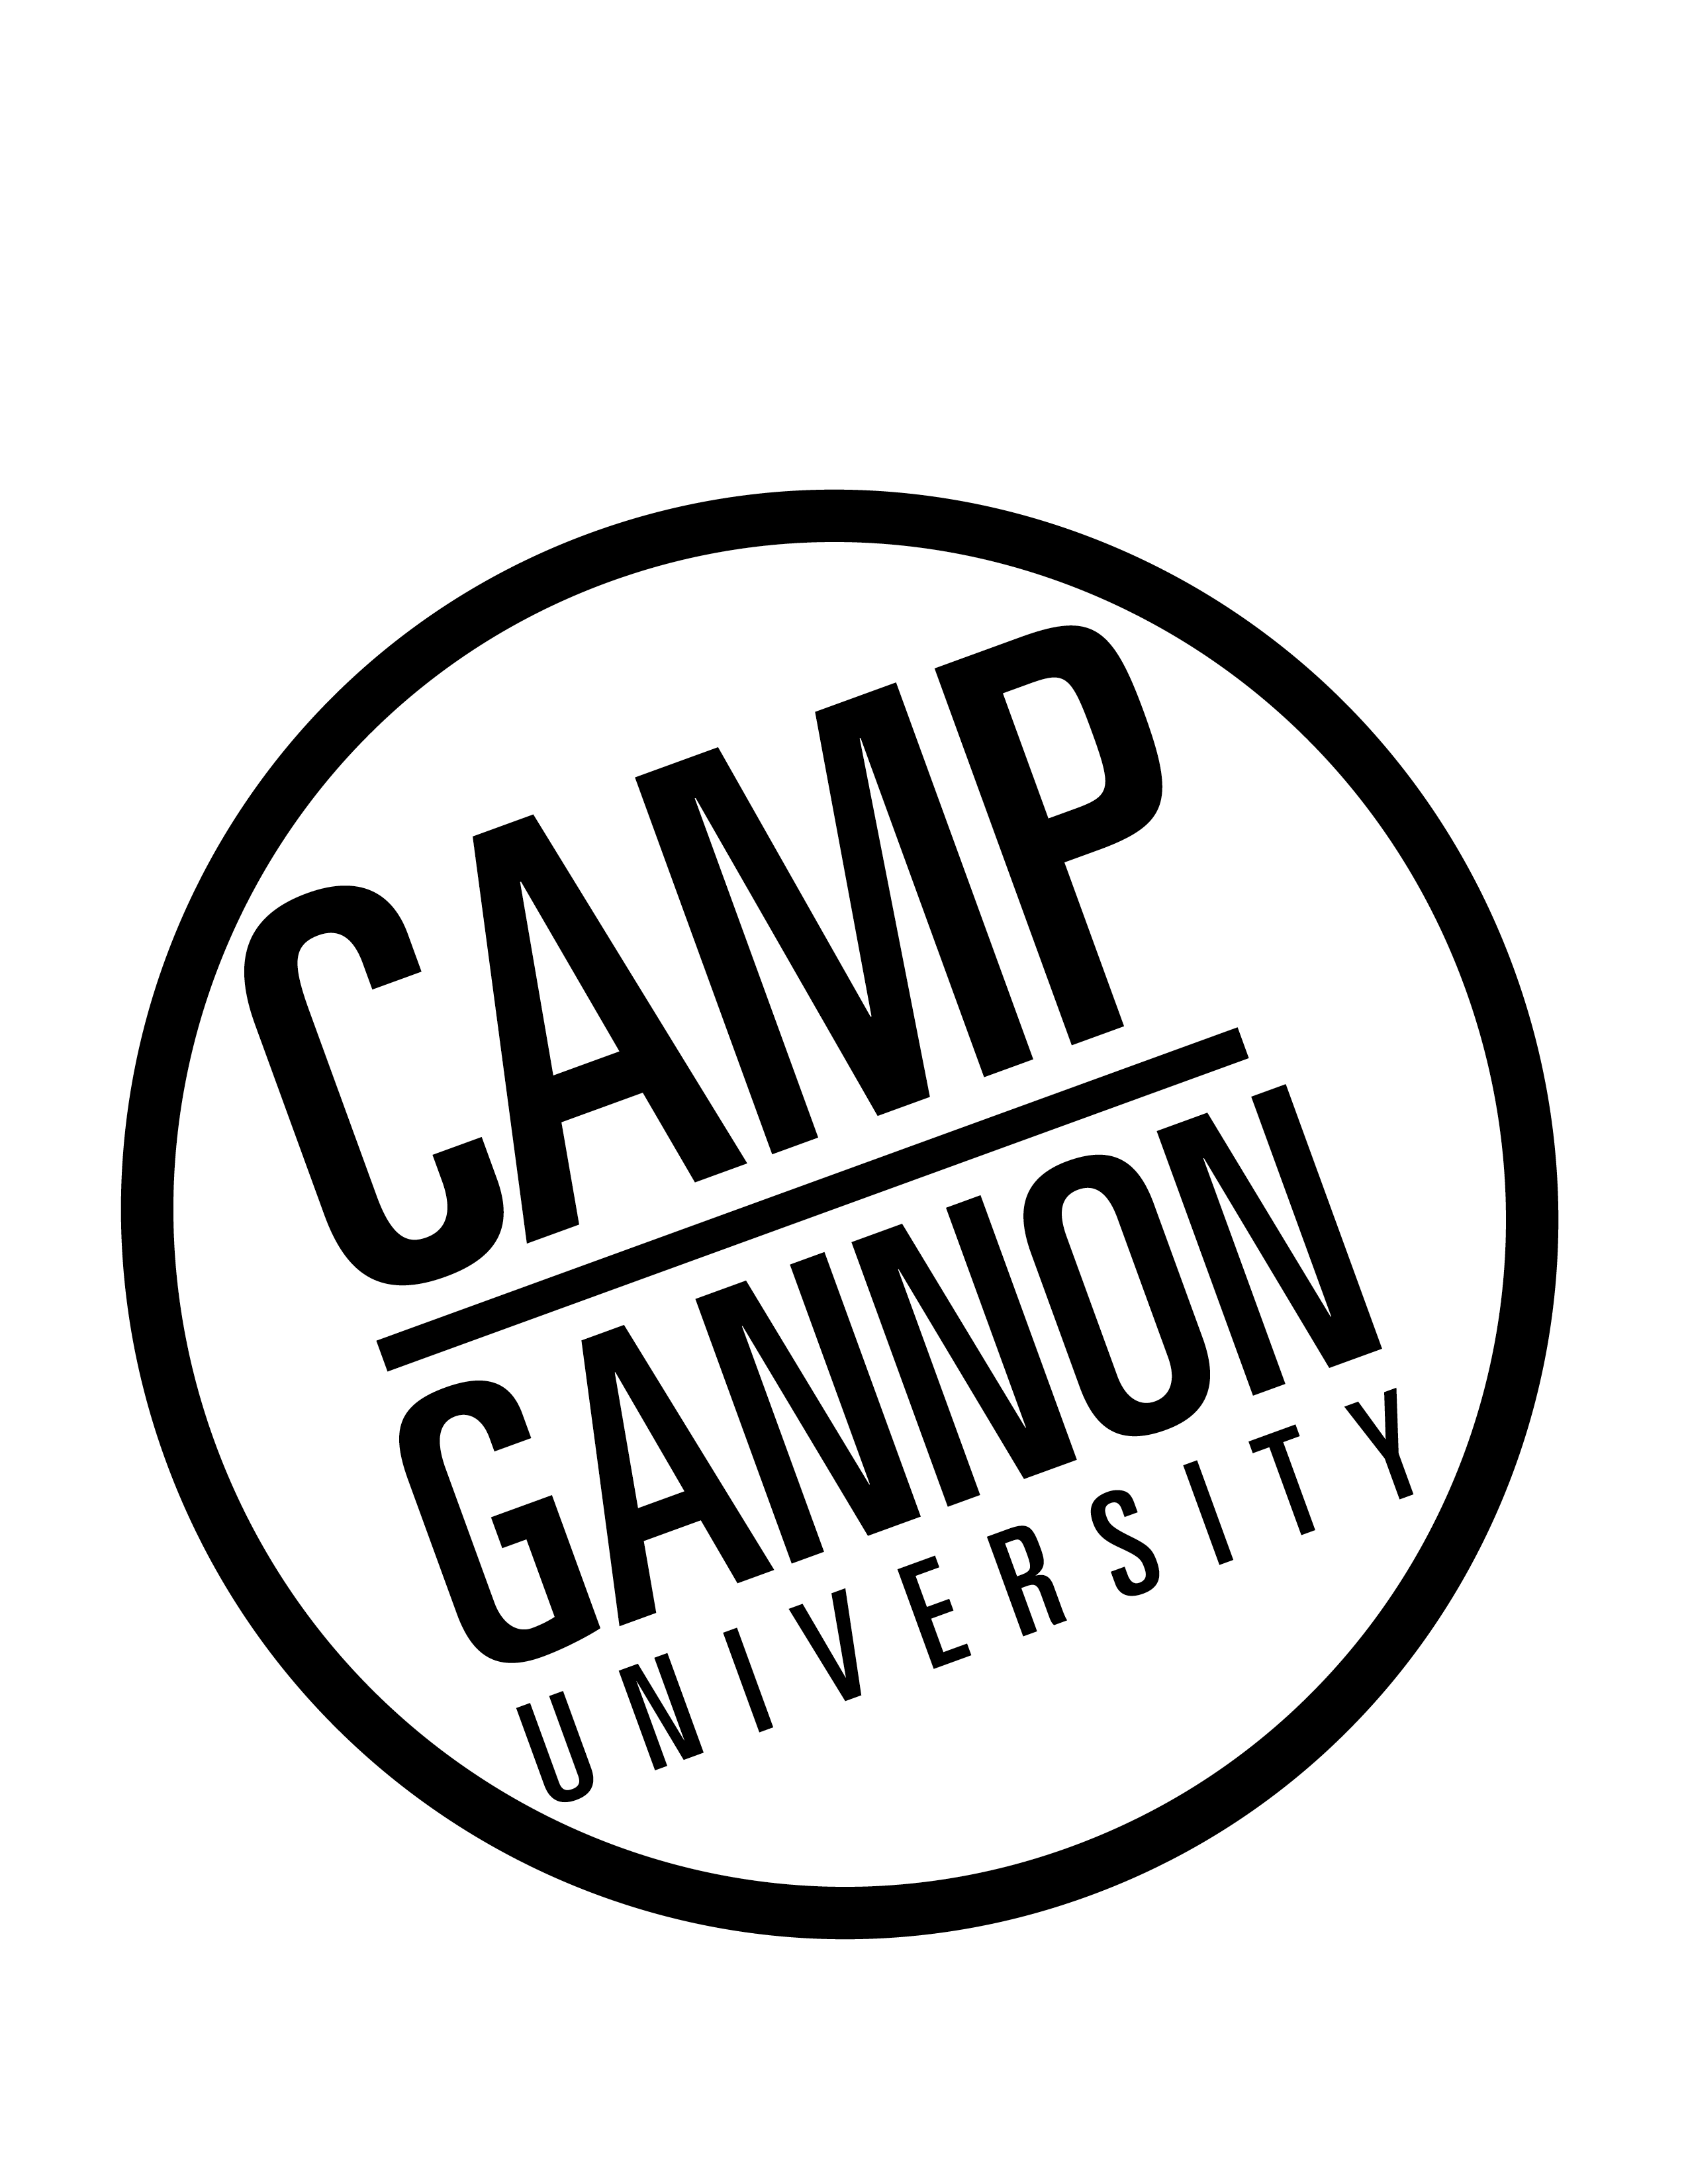 Camp Gannon logo